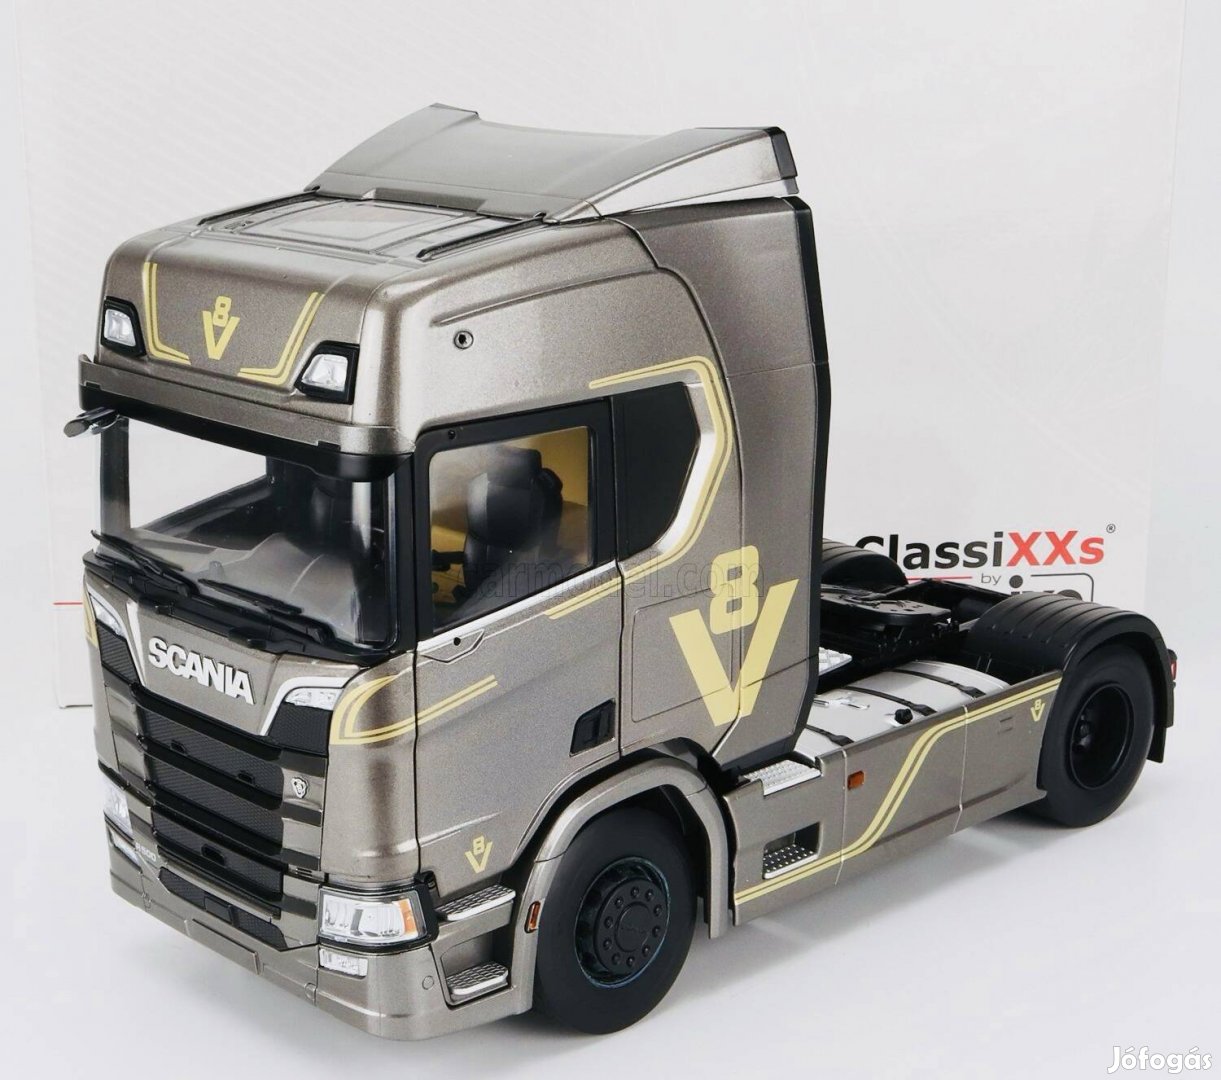 1:18 1/18 Premium Classixxs Scania V8